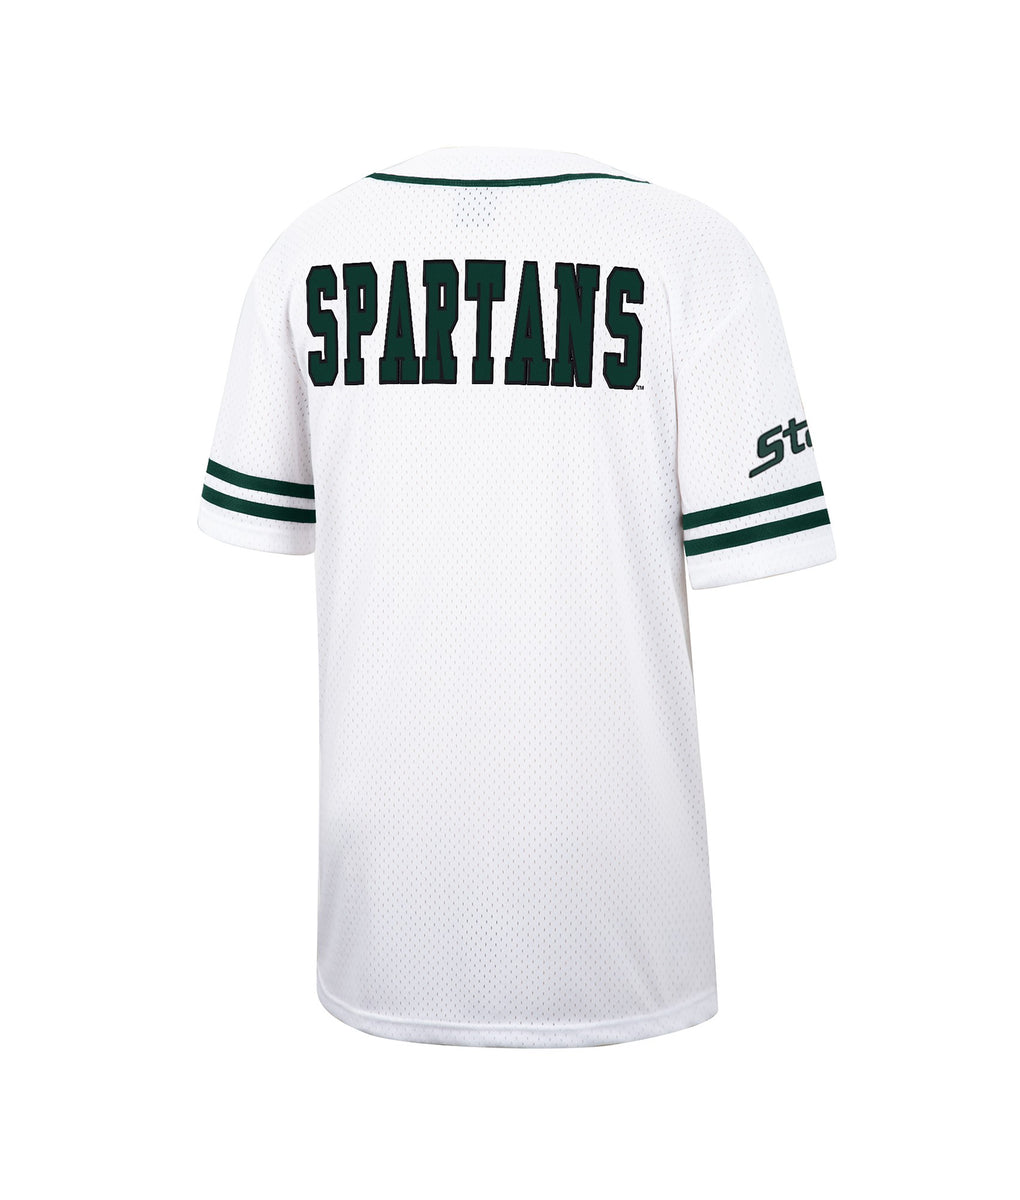 Men's Nike White Michigan State Spartans Replica Baseball Jersey